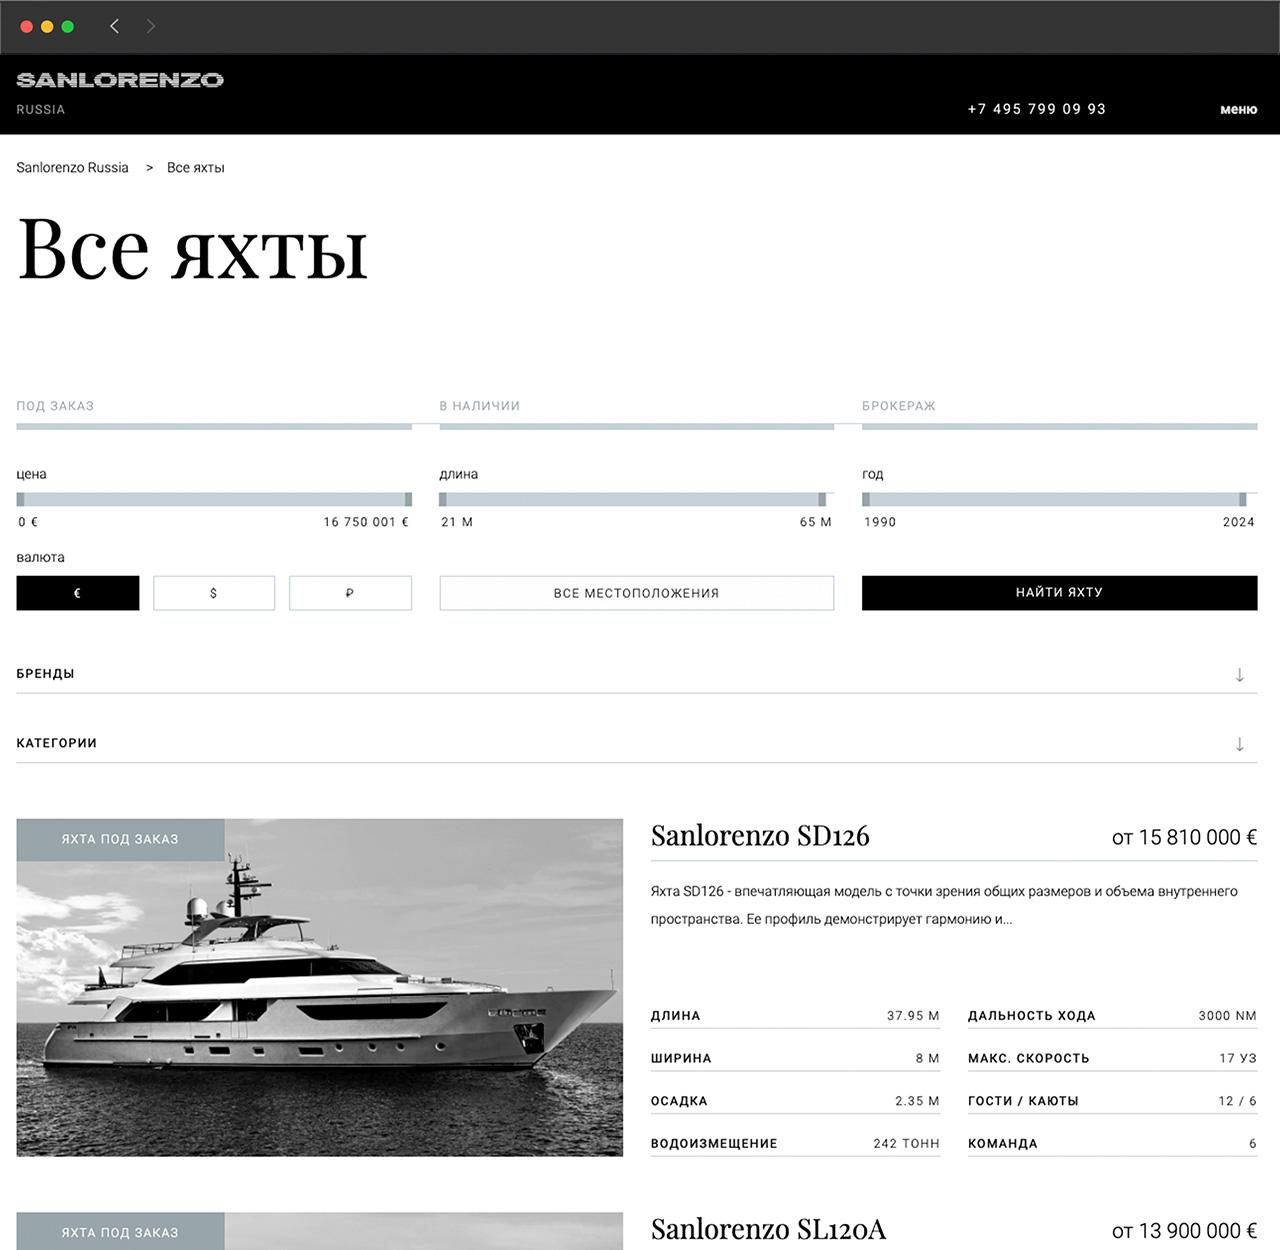 Sanlorenzo Russia — Yacht search page